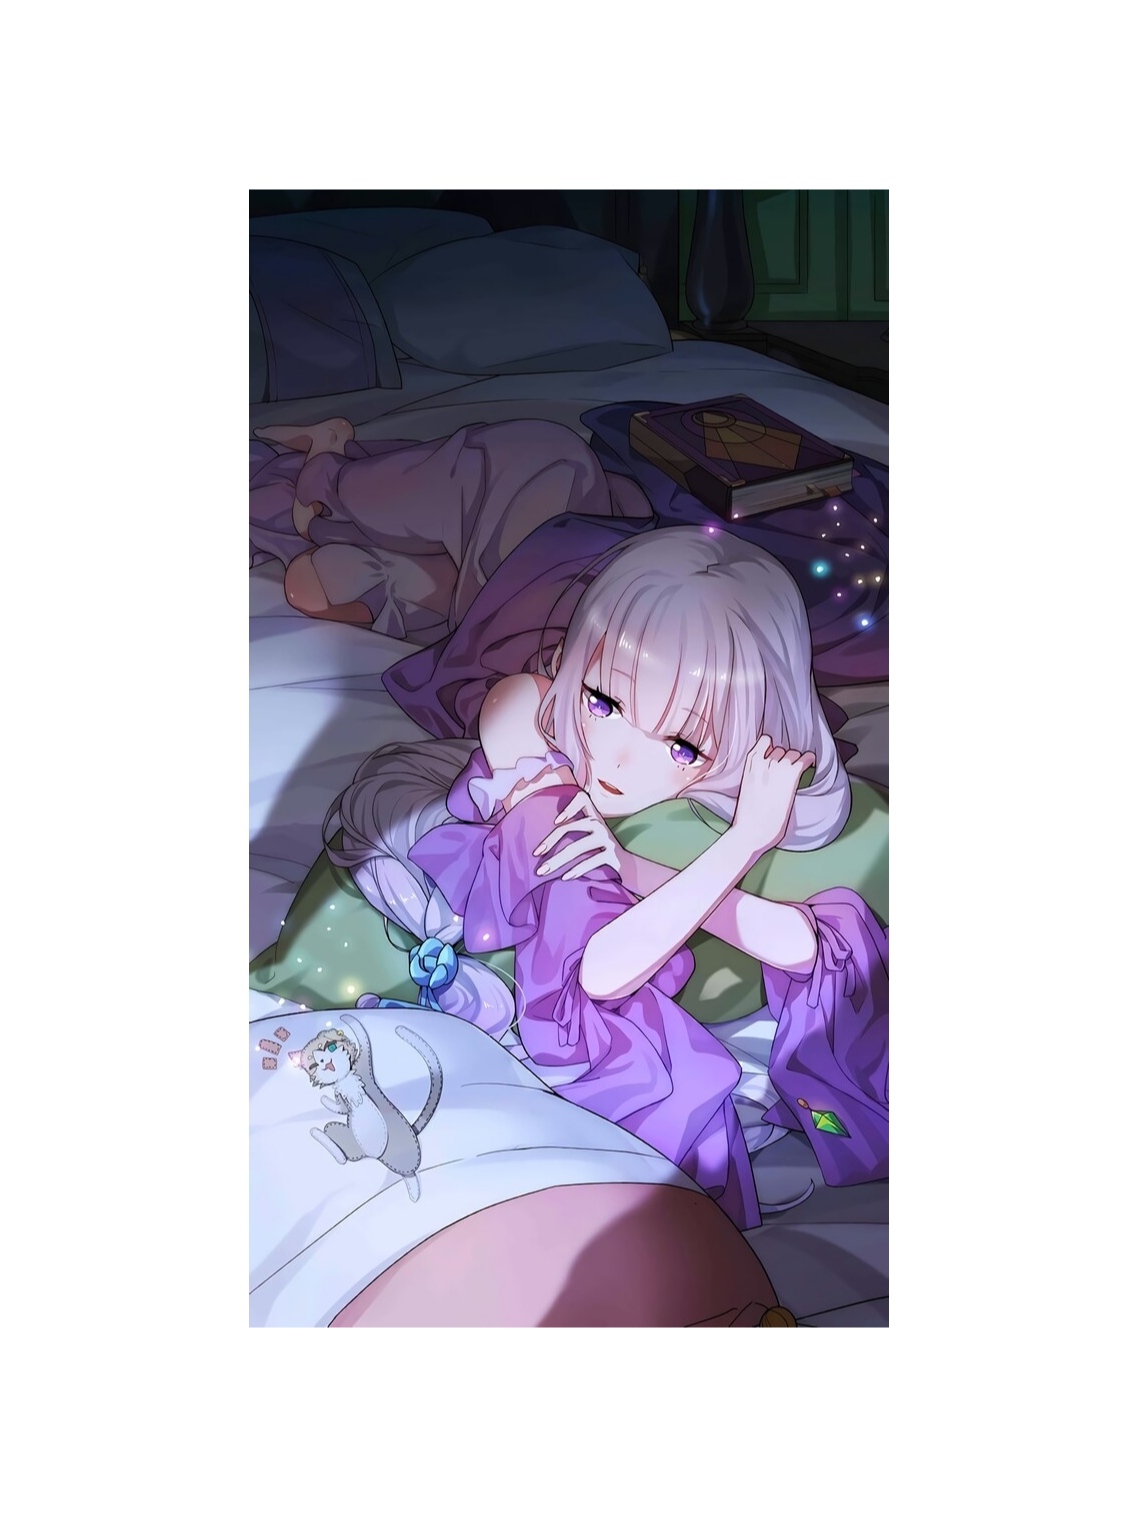 Anime 1138x1517 anime girls artwork Re:Zero Kara Hajimeru Isekai Seikatsu Emilia (Re: Zero) in bed silver hair purple eyes cats